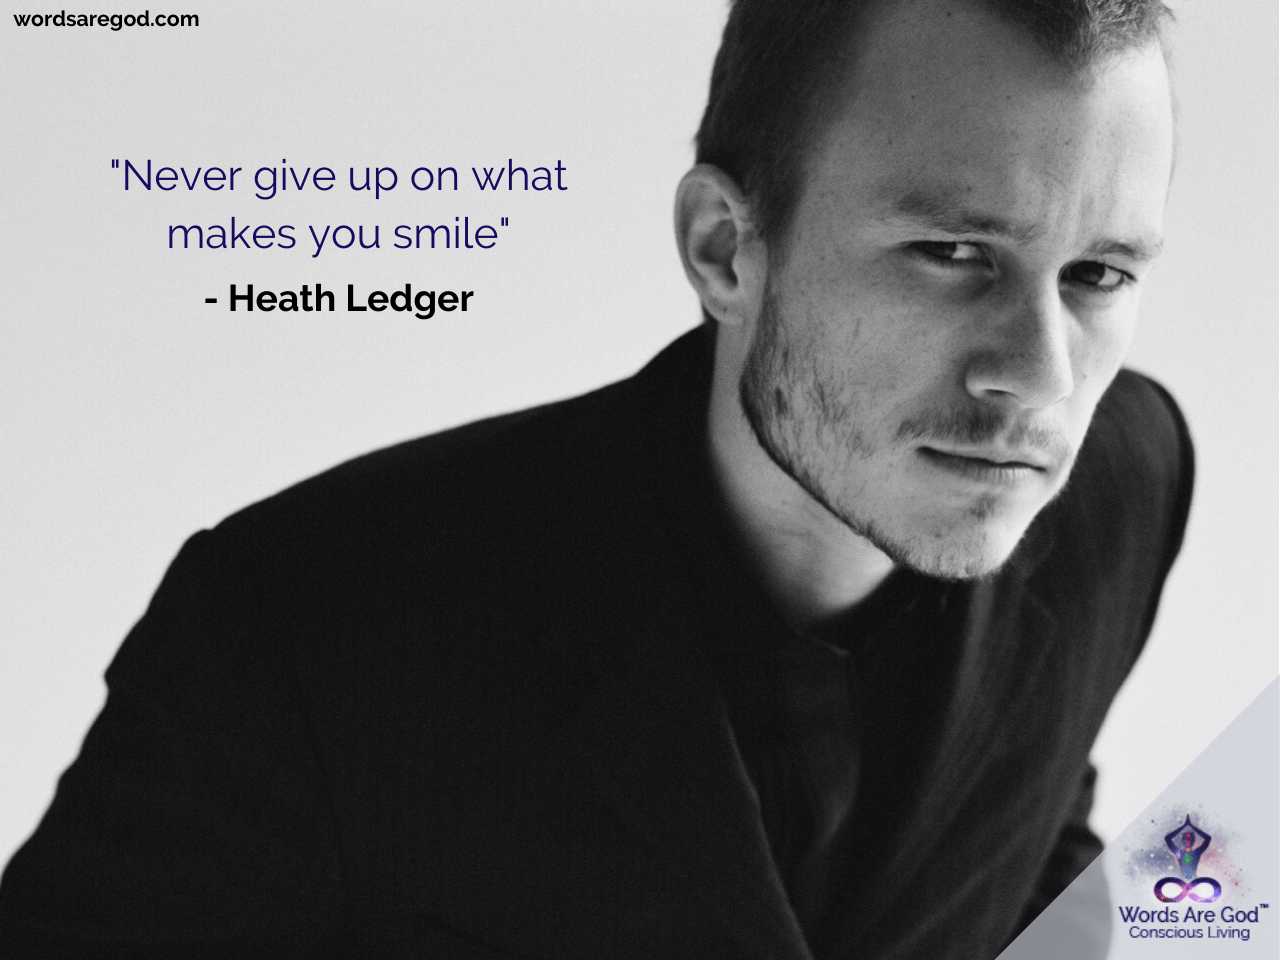 Heath Ledger Inspirational Quotes by Heath Ledger